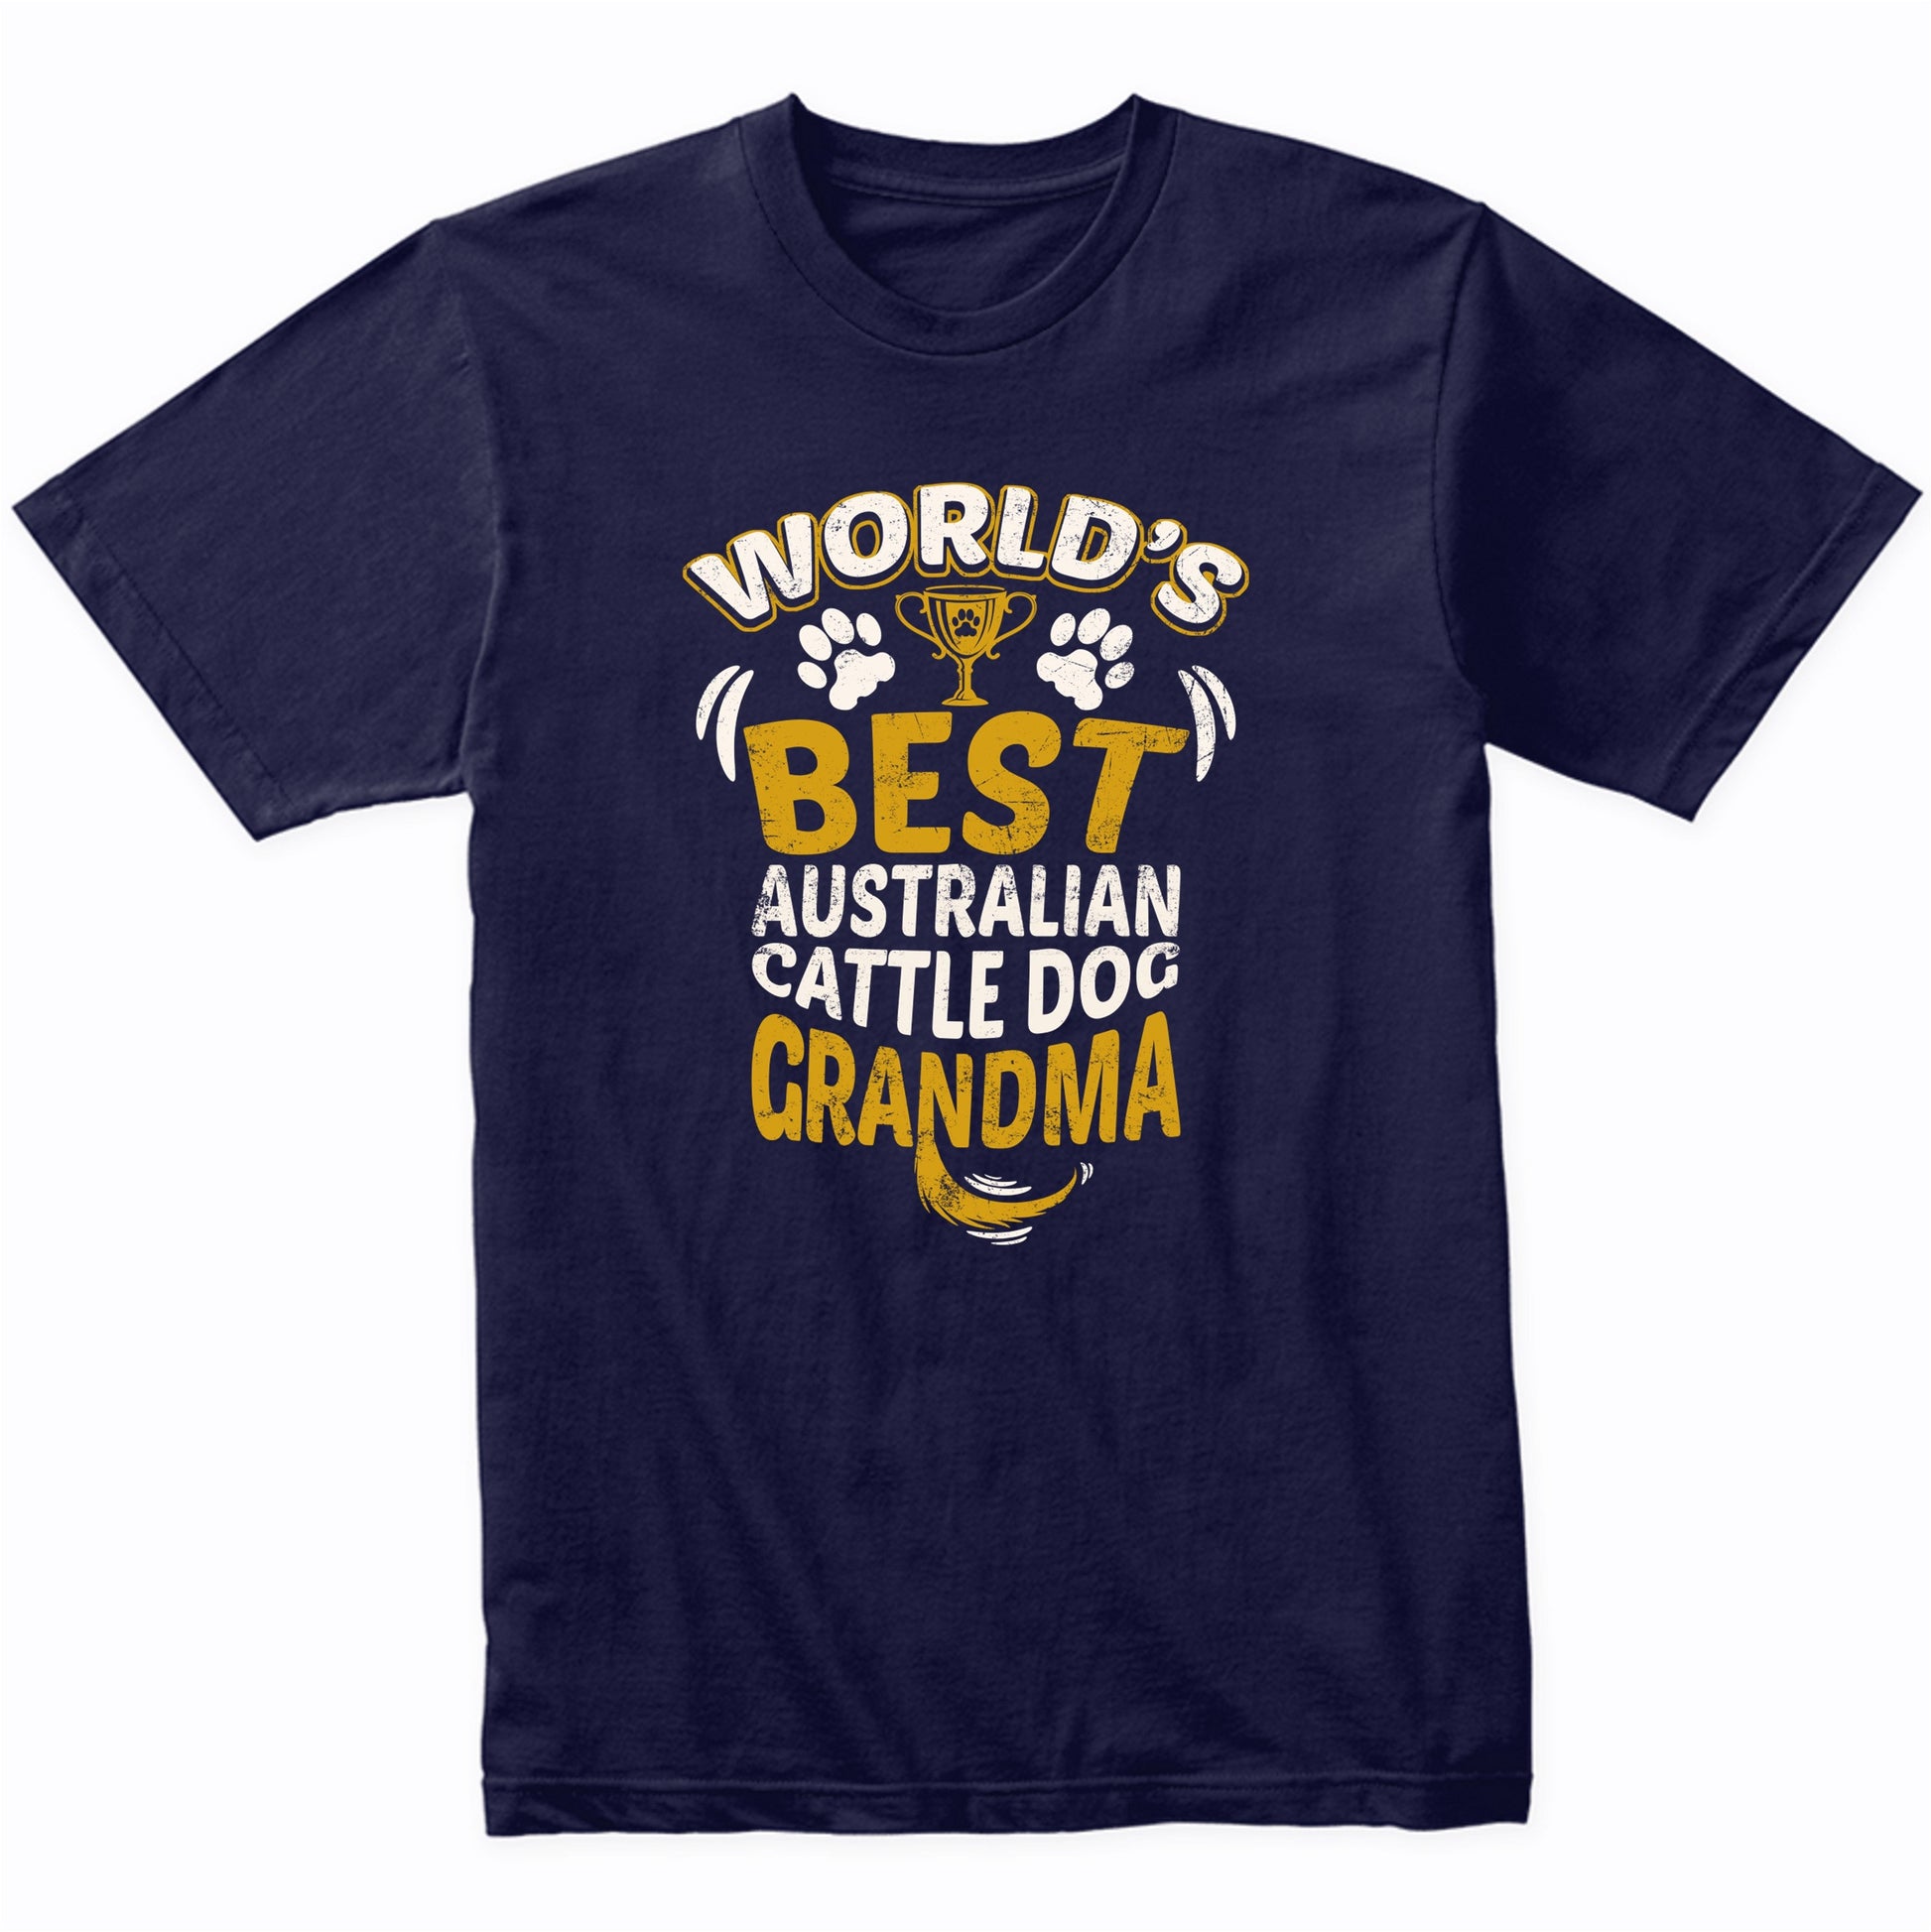 World's Best Australian Cattle Dog Grandma Graphic T-Shirt